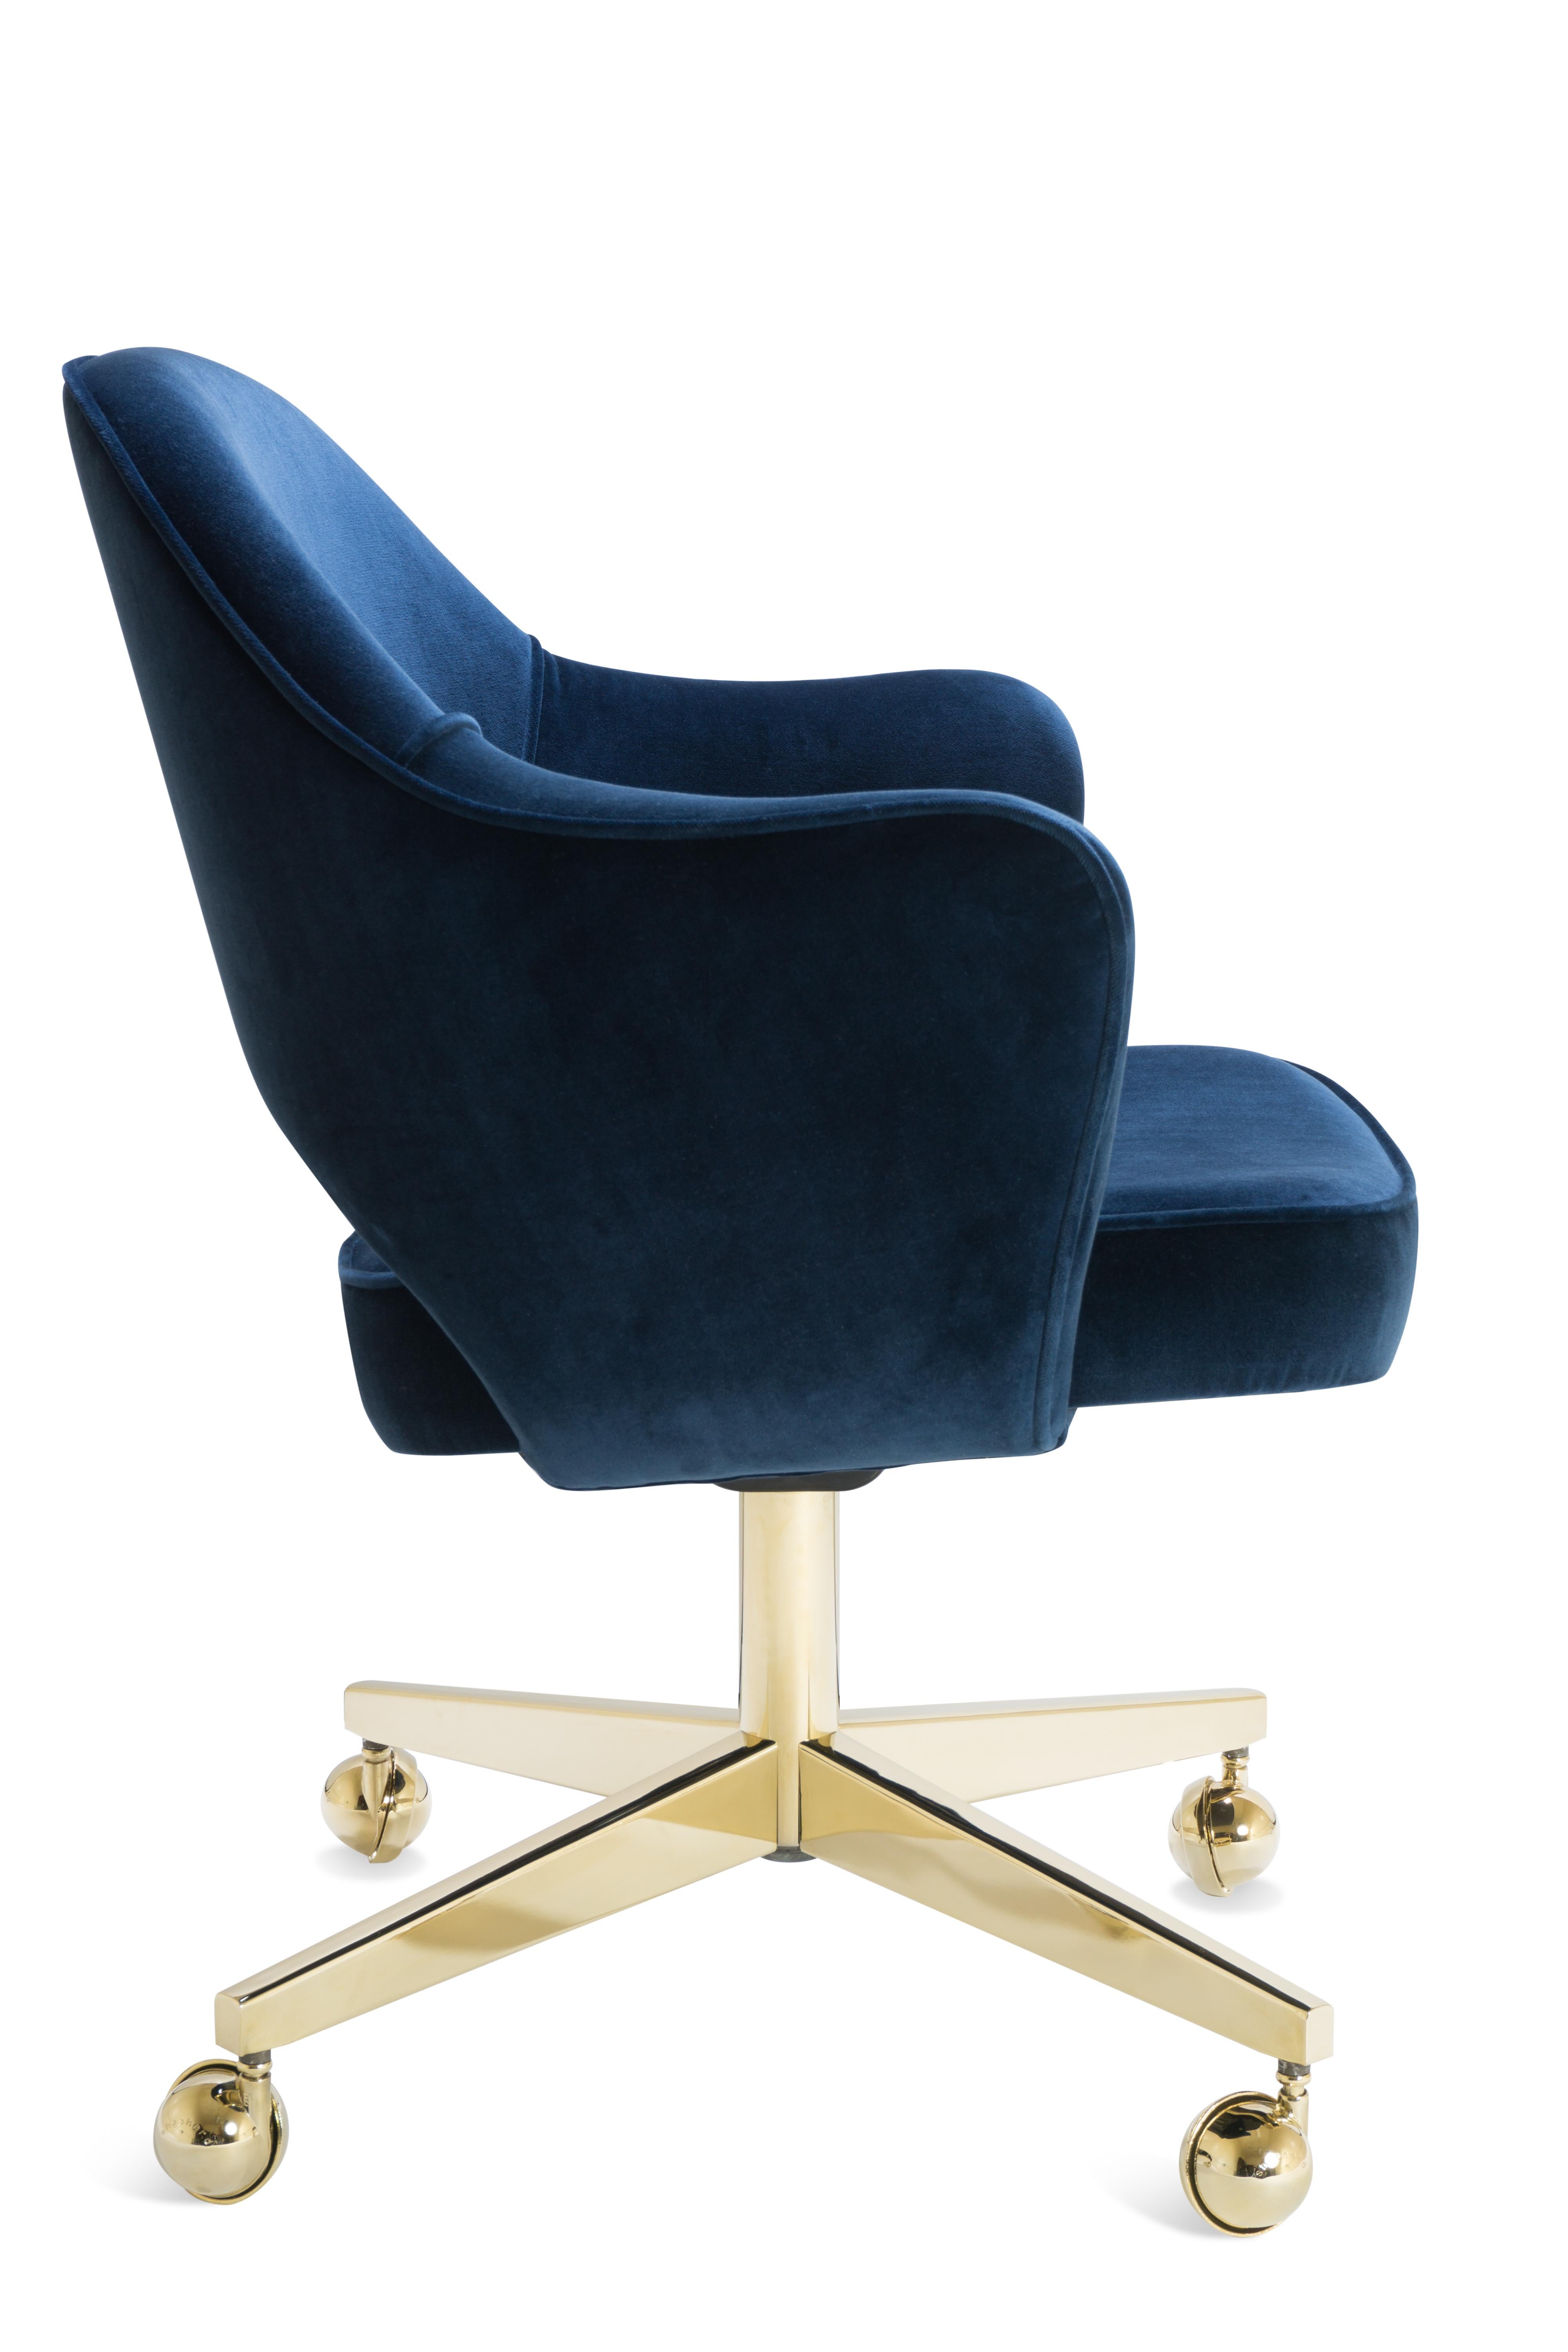 Plated Saarinen Executive Arm Chair in Navy Velvet, Swivel Base, Gold Edition